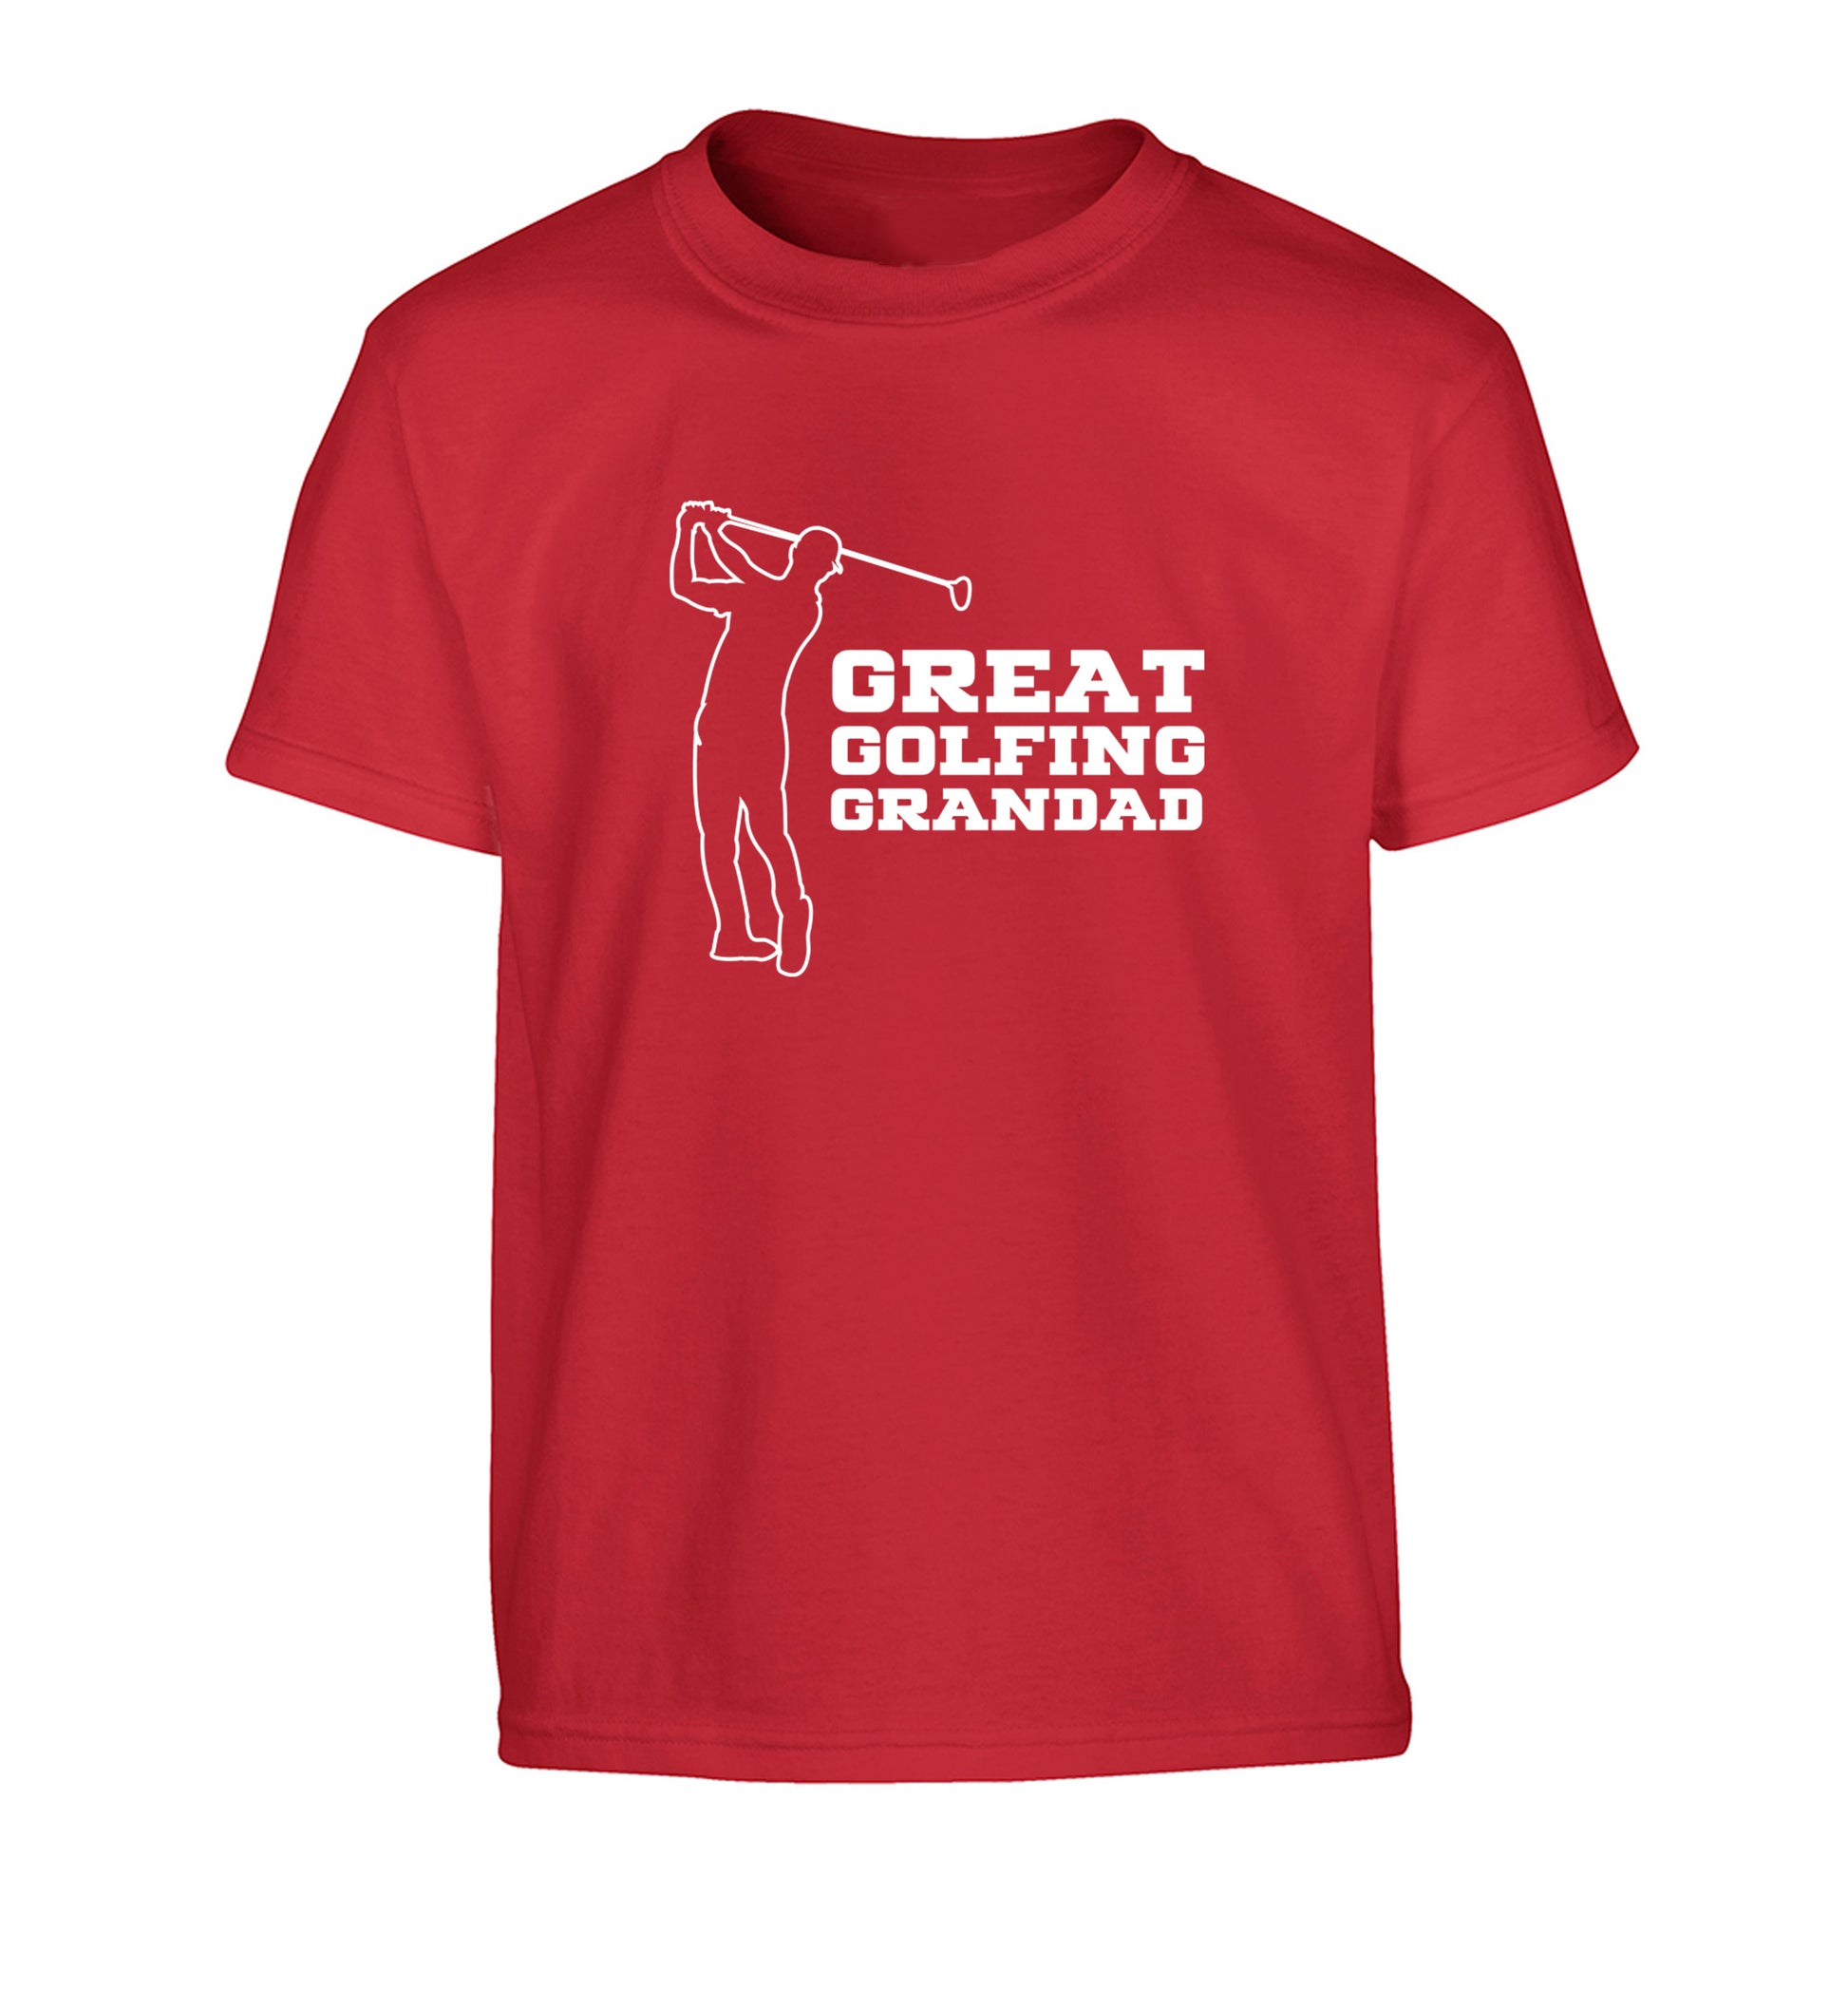 Great Golfing Grandad Children's red Tshirt 12-13 Years